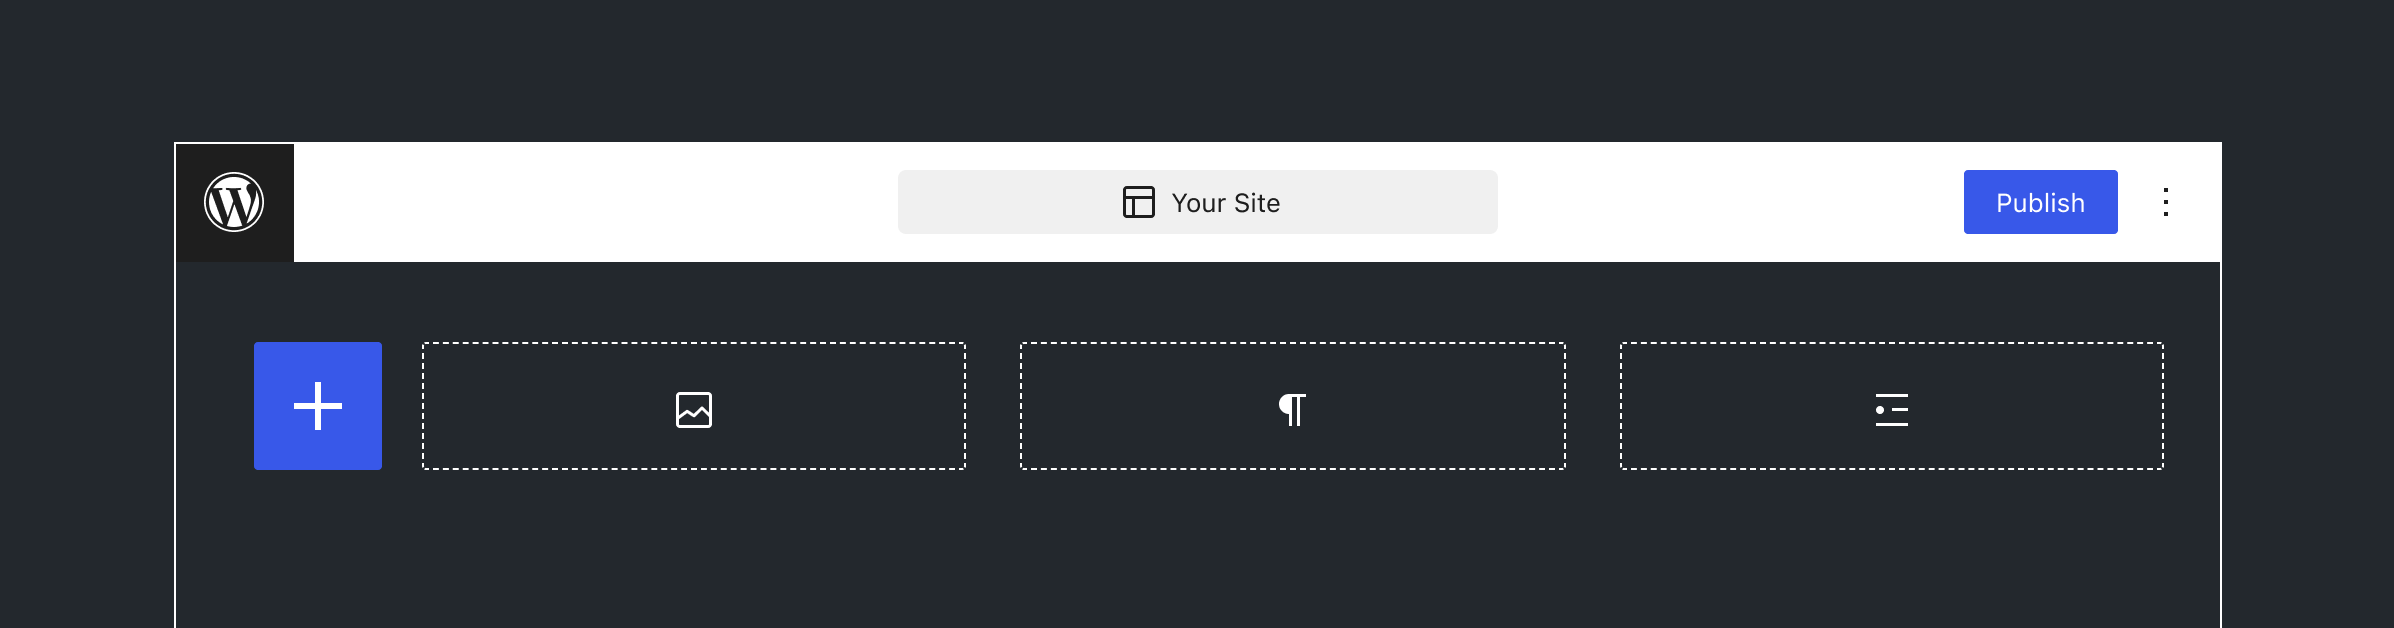 WordPress编辑器视图显示带插入器图标的三个块的轮廓